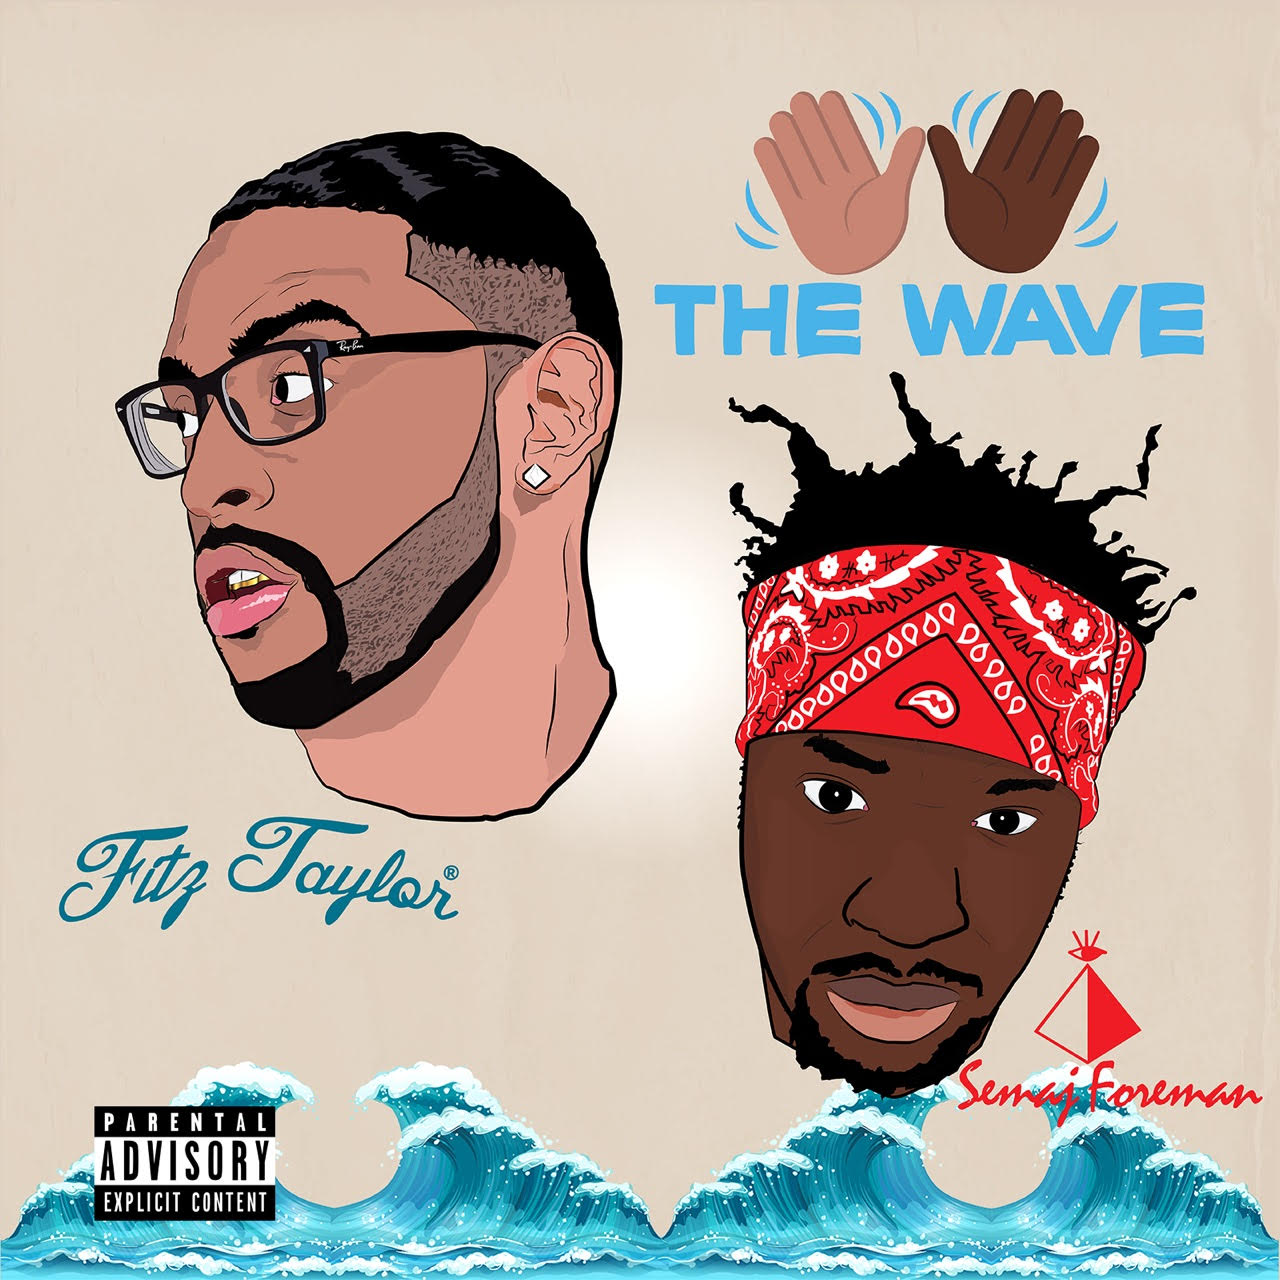 New Music: Fitz Taylor And Semaj Foreman – The Wave | @FitzTaylor @SemajForeman